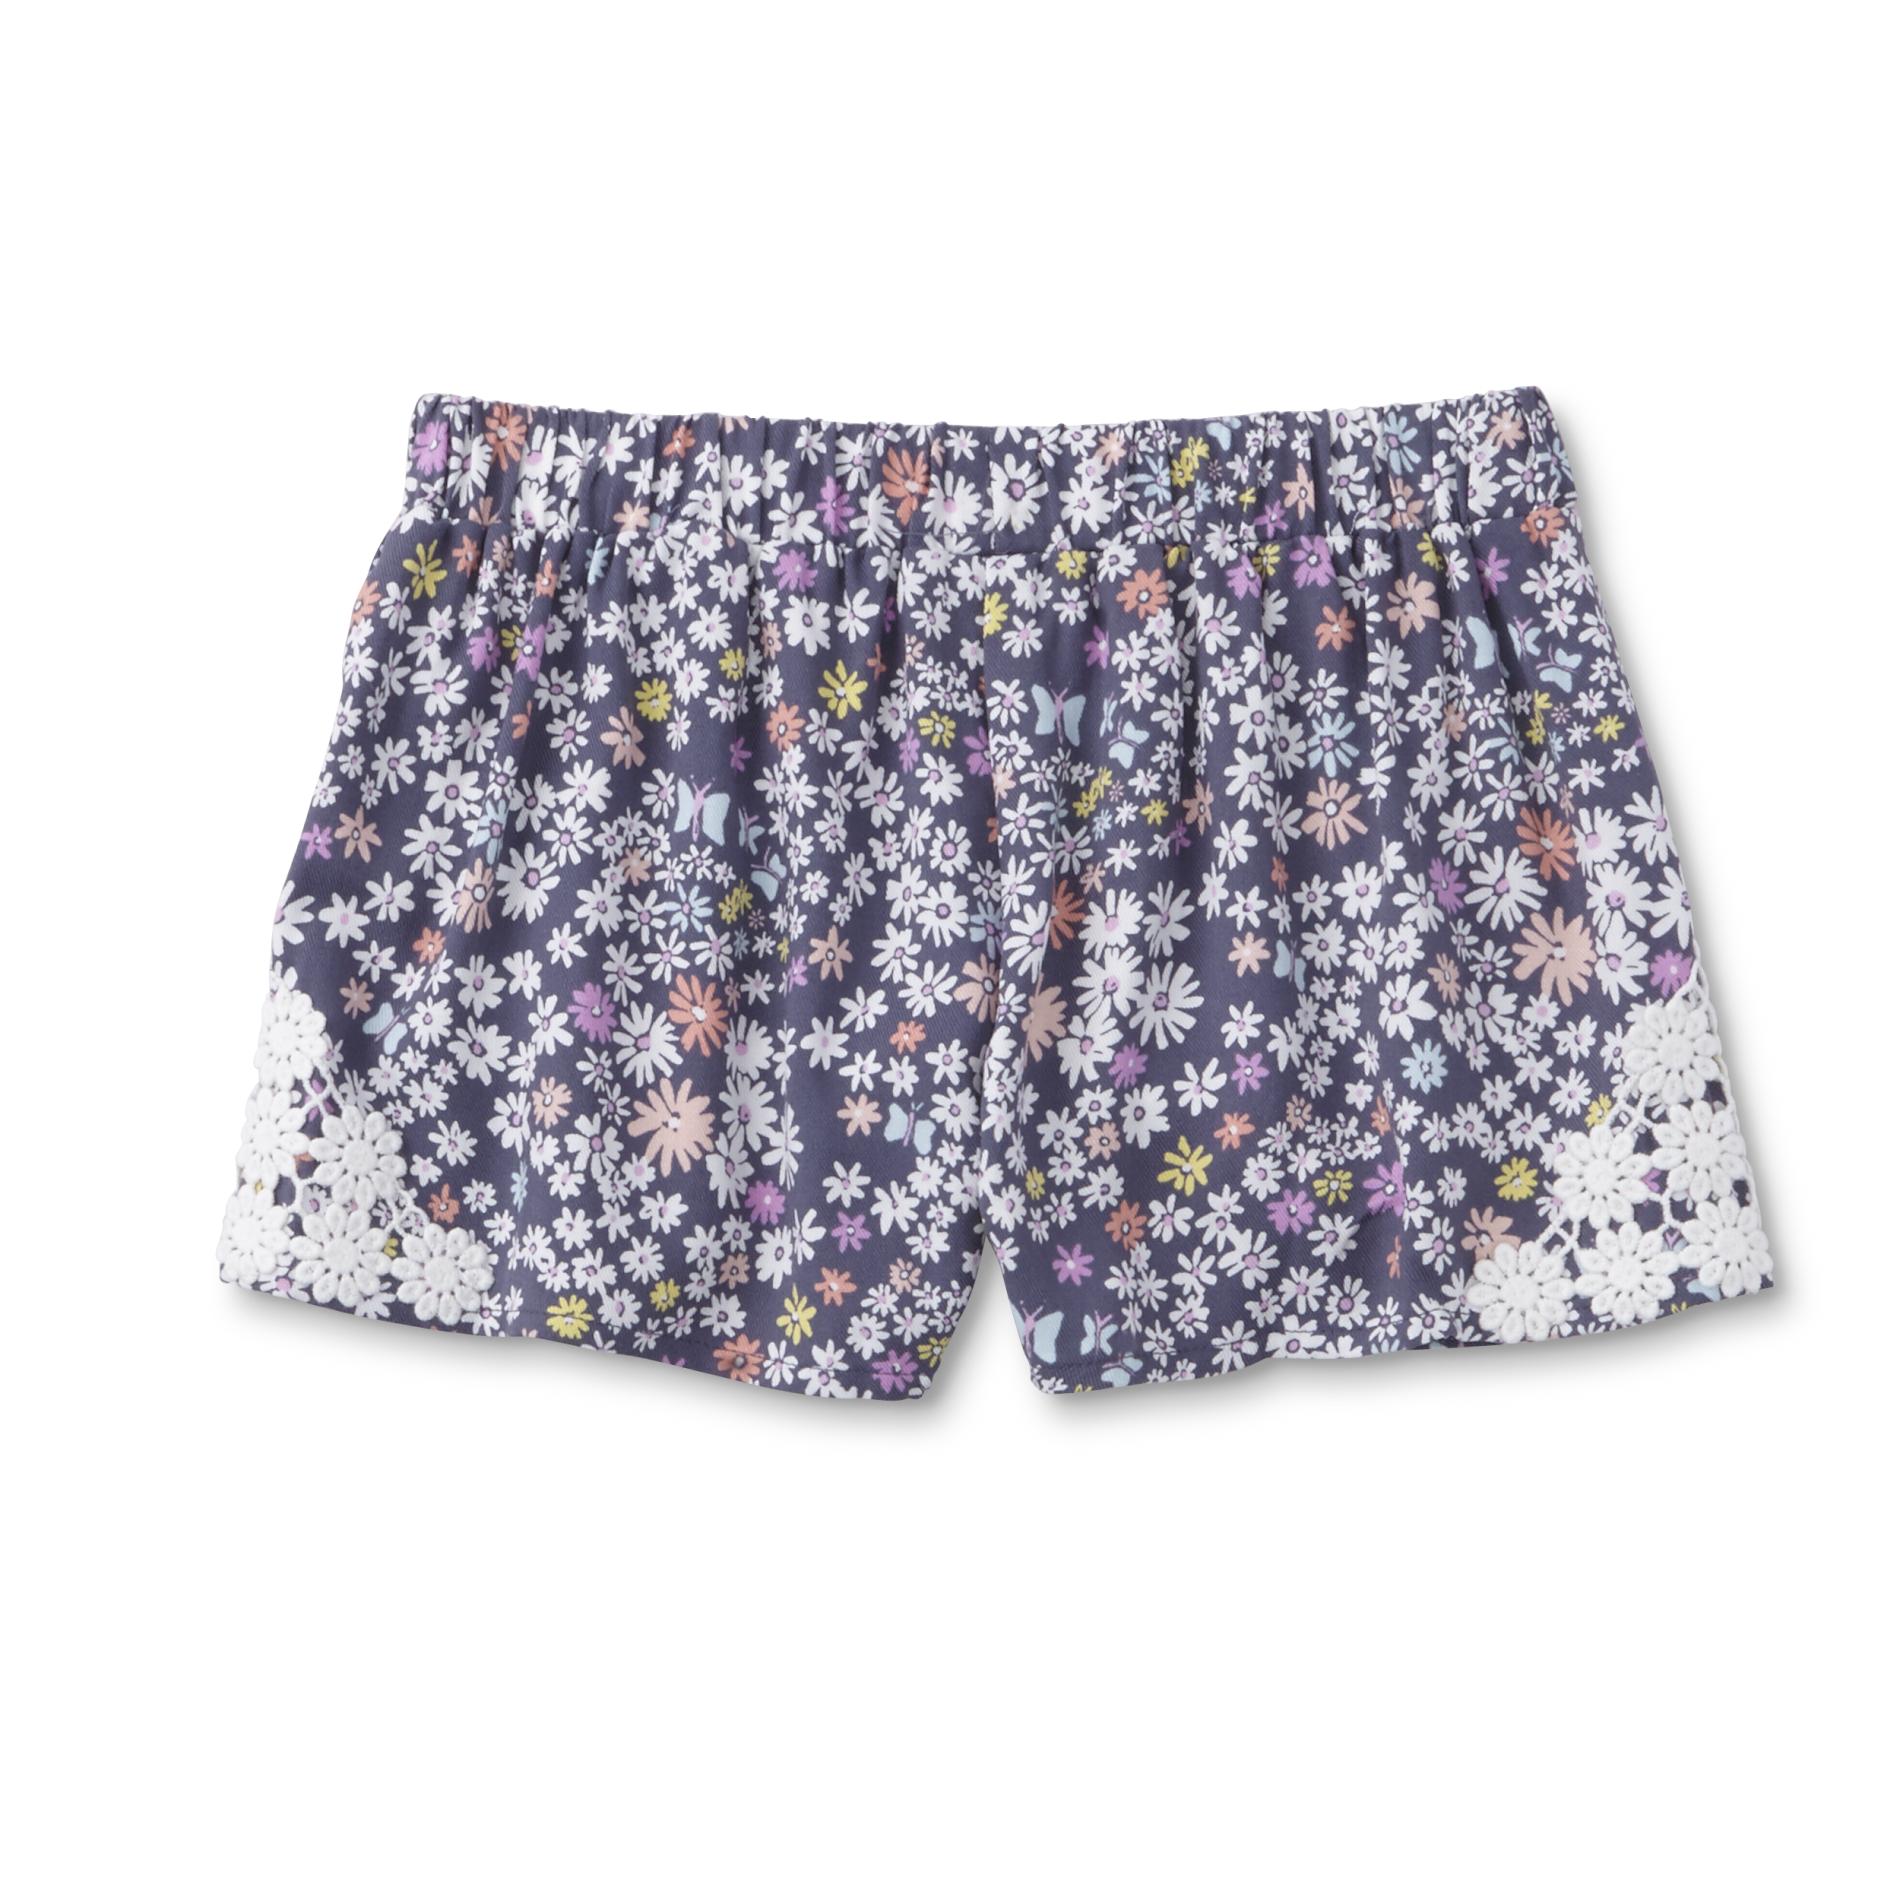 Toughskins Girls' Crochet Trim Shorts - Floral